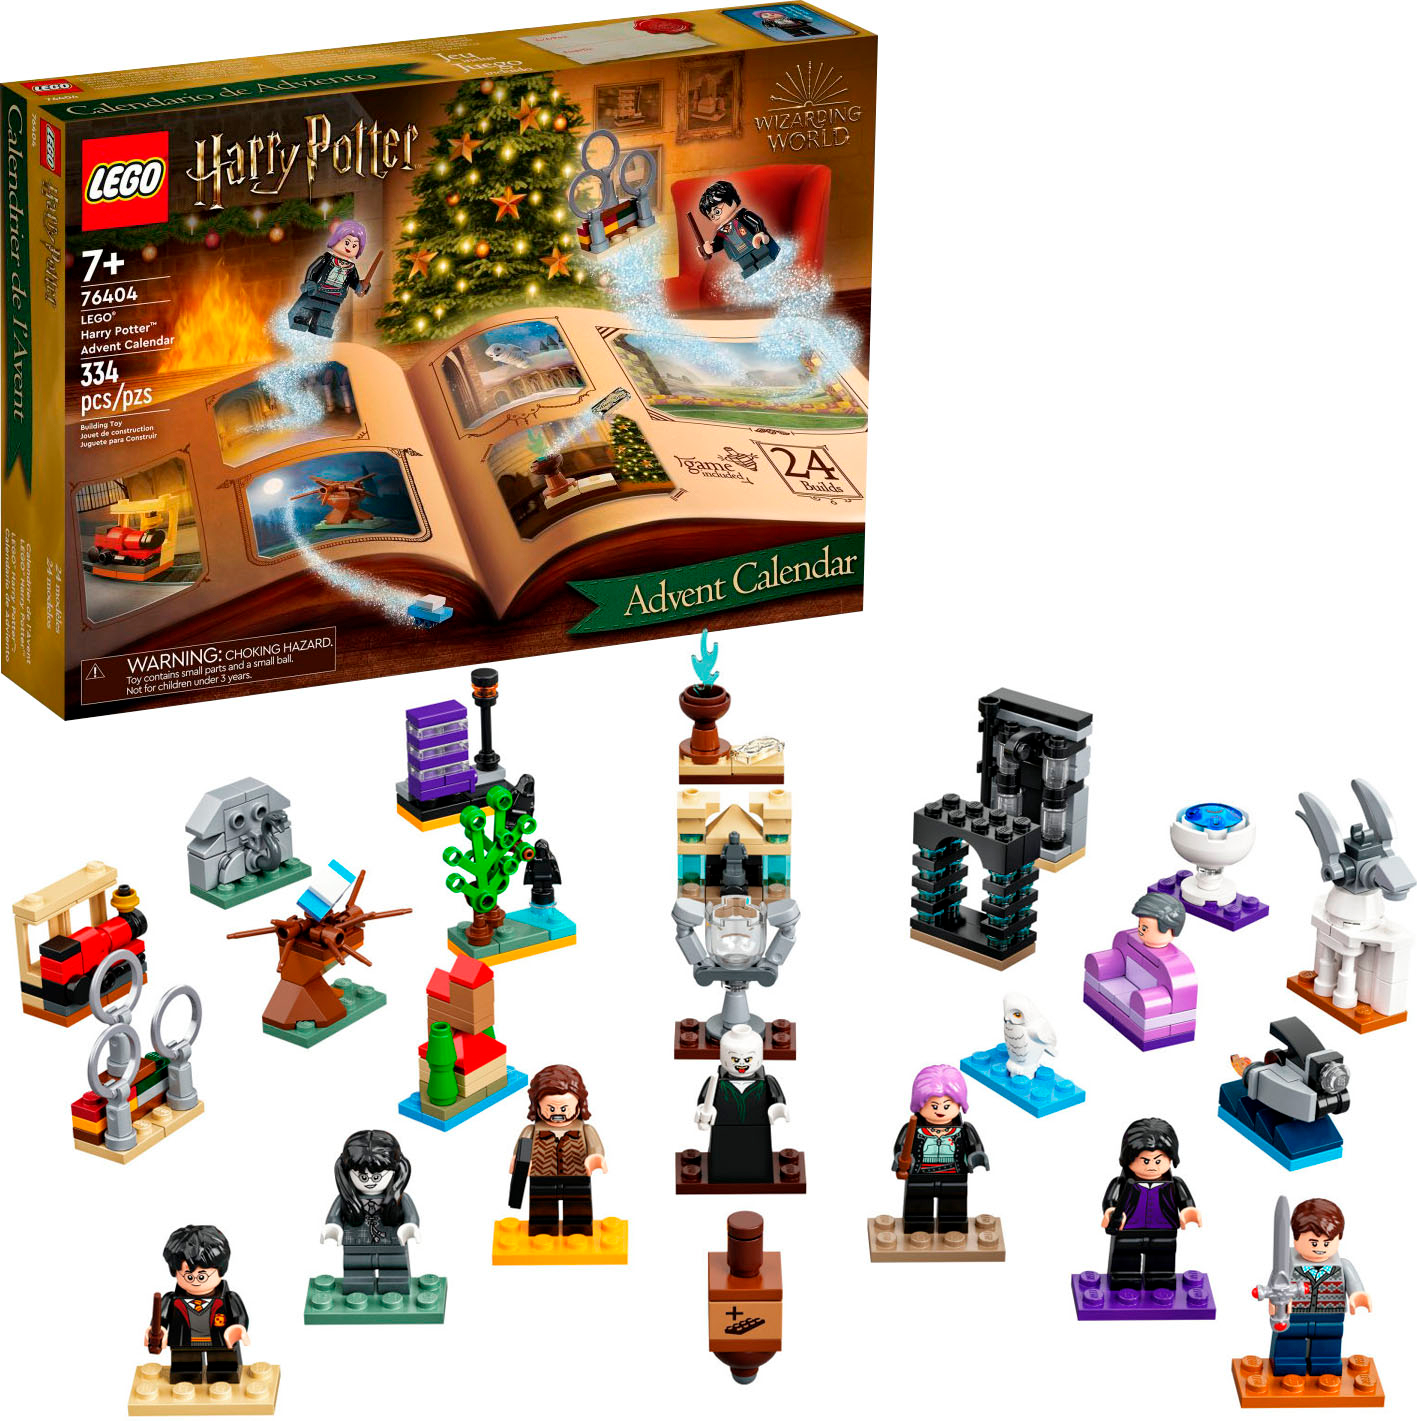 Illusion Fern Spille computerspil LEGO Harry Potter Advent Calendar 76404 Building Toy Set (334 Pieces)  6378984 - Best Buy